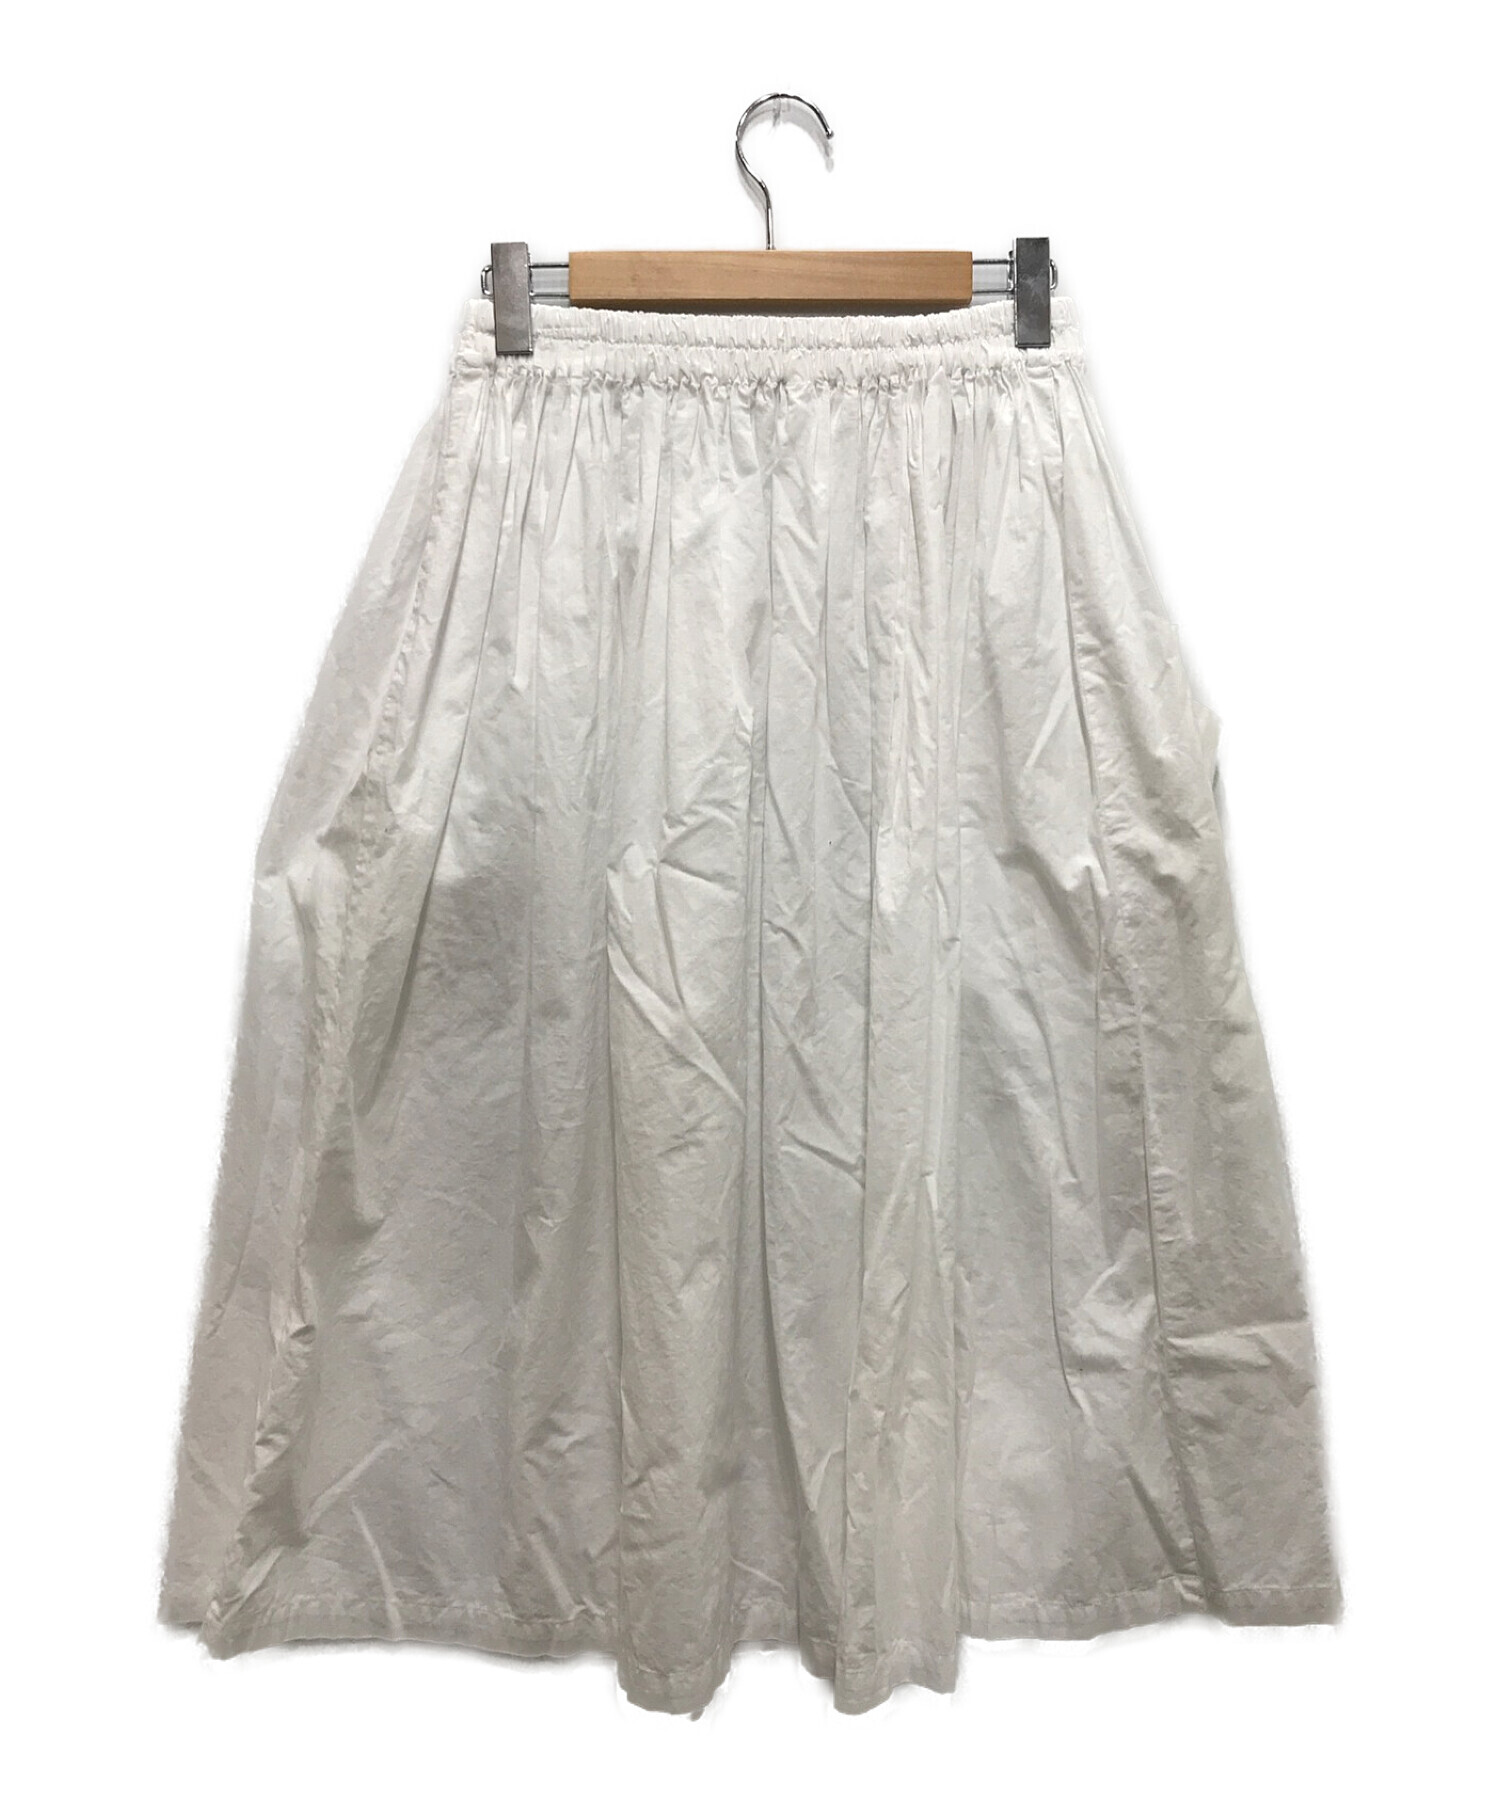 homspun (ホームスパン) ダブルポケットギャザースカート ホワイト サイズ:M